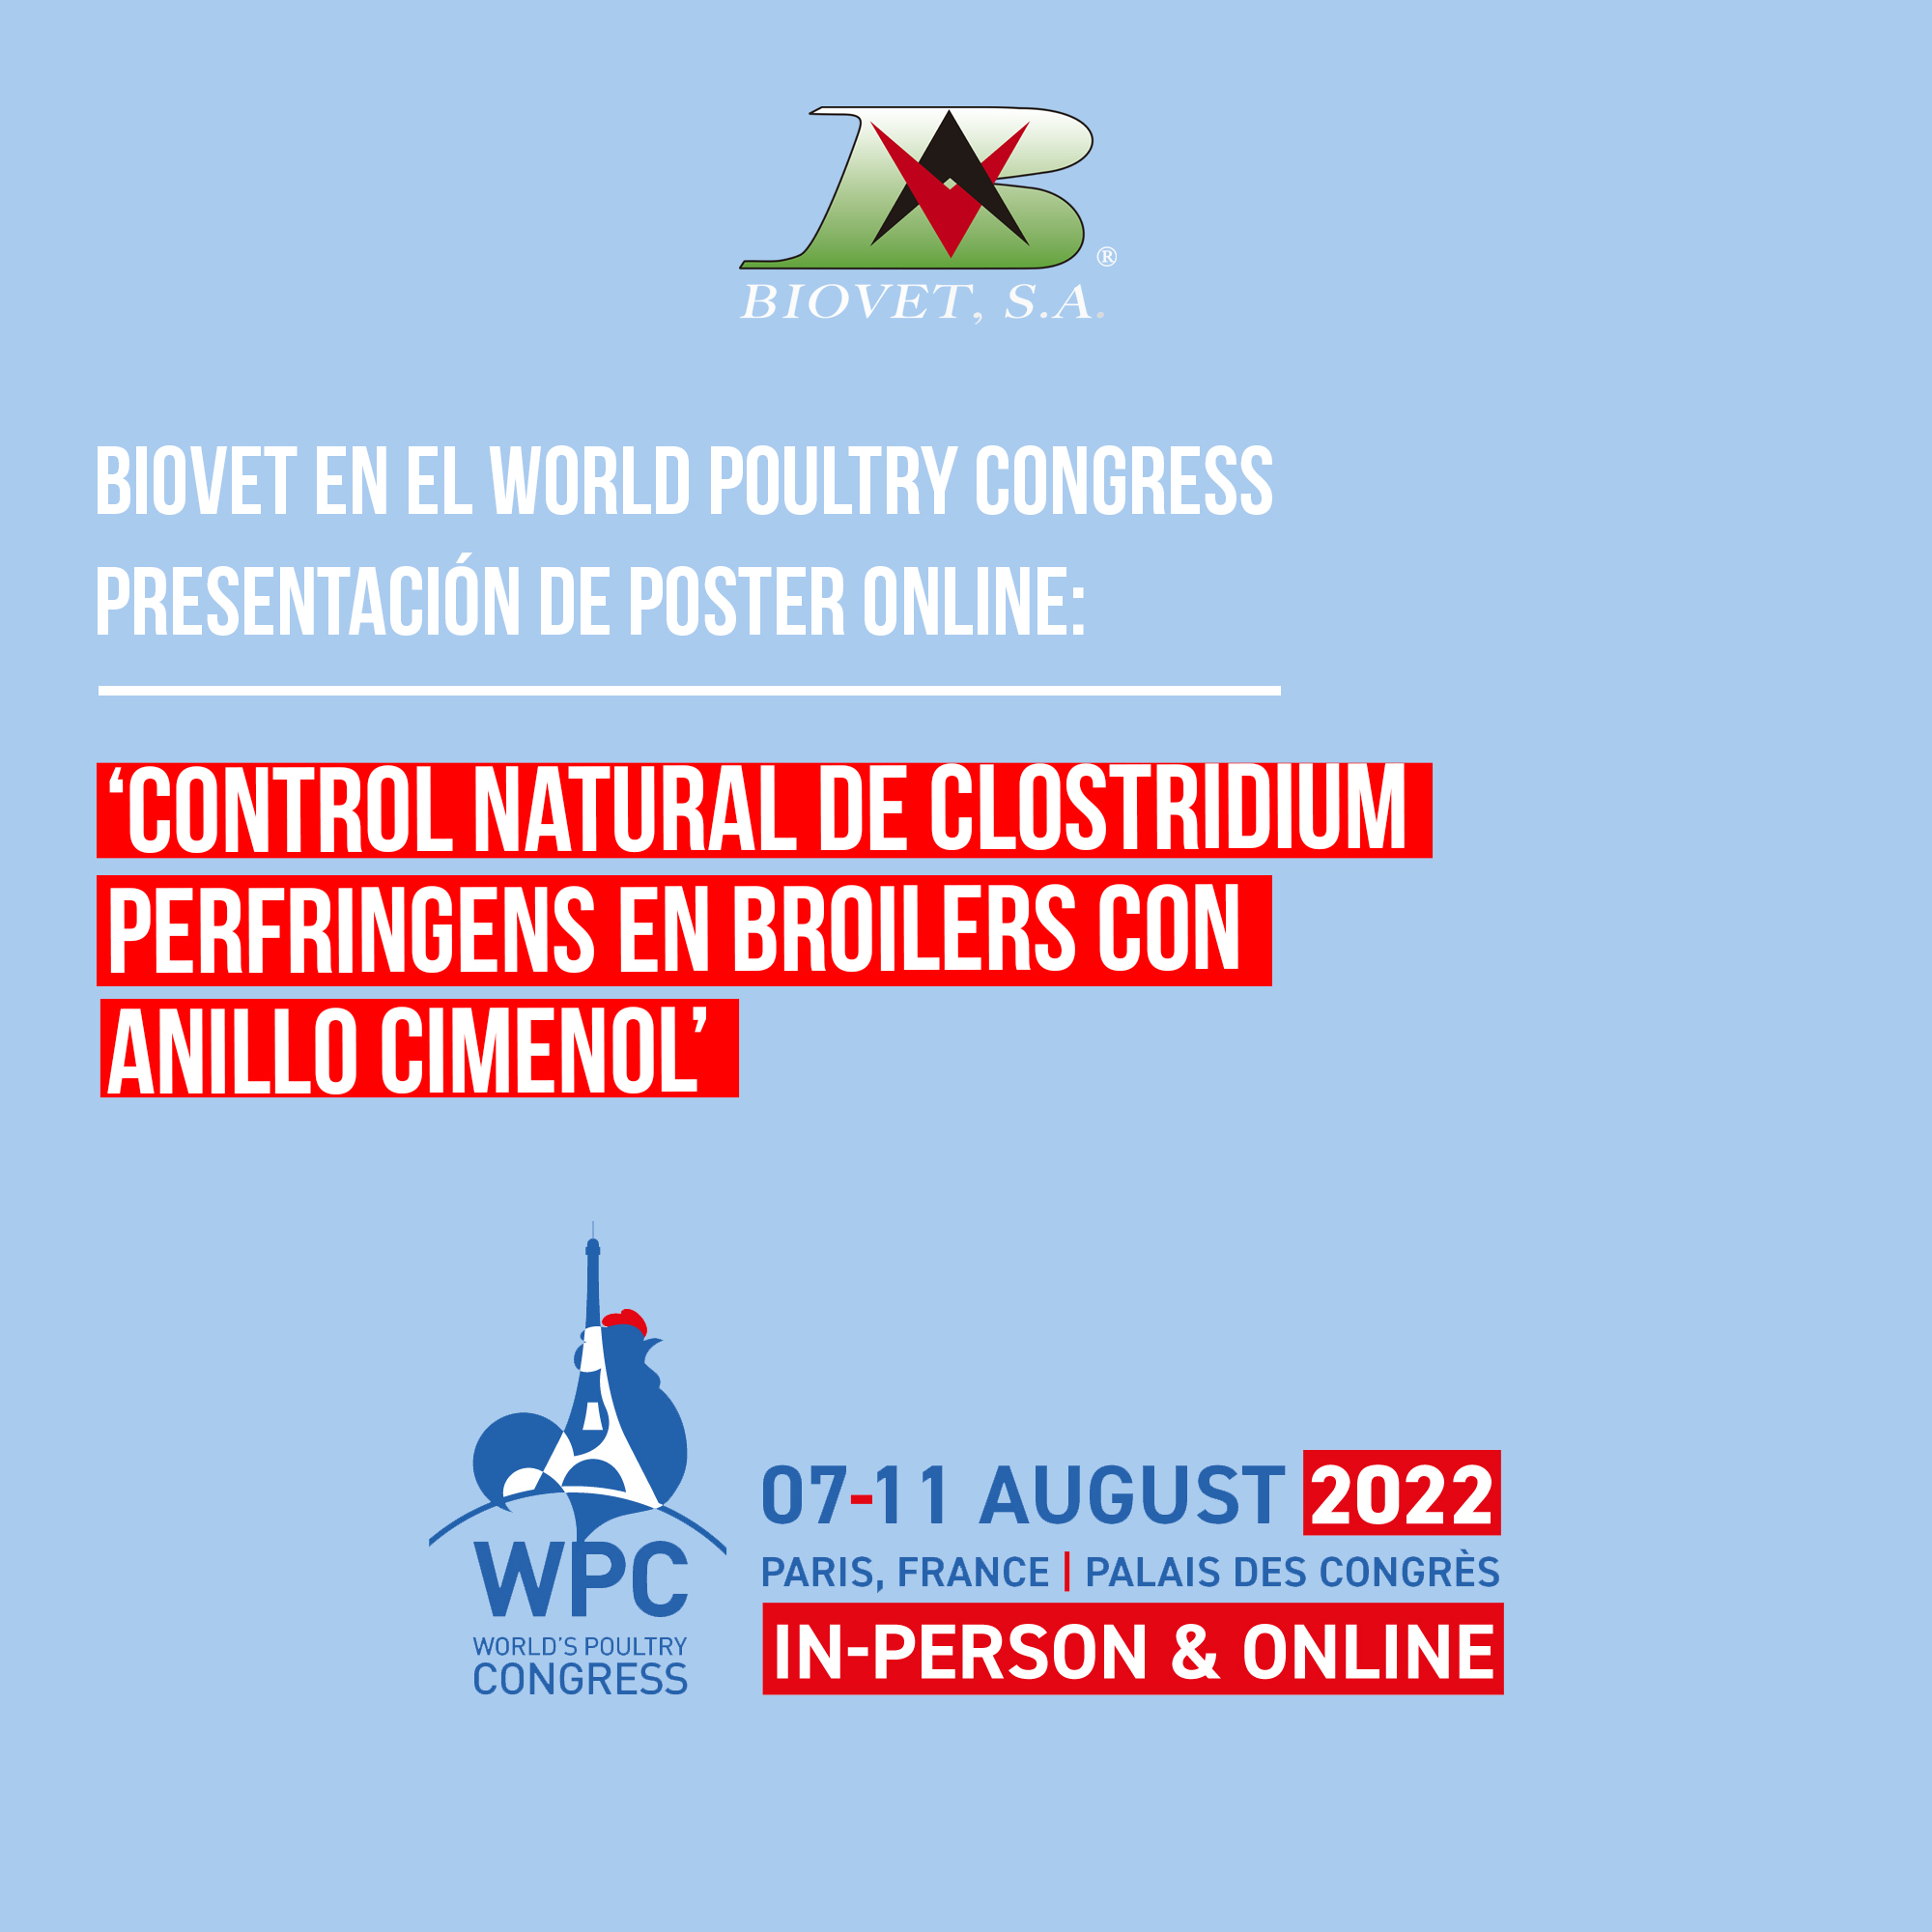 Biovet en el World Poultry Congress de París